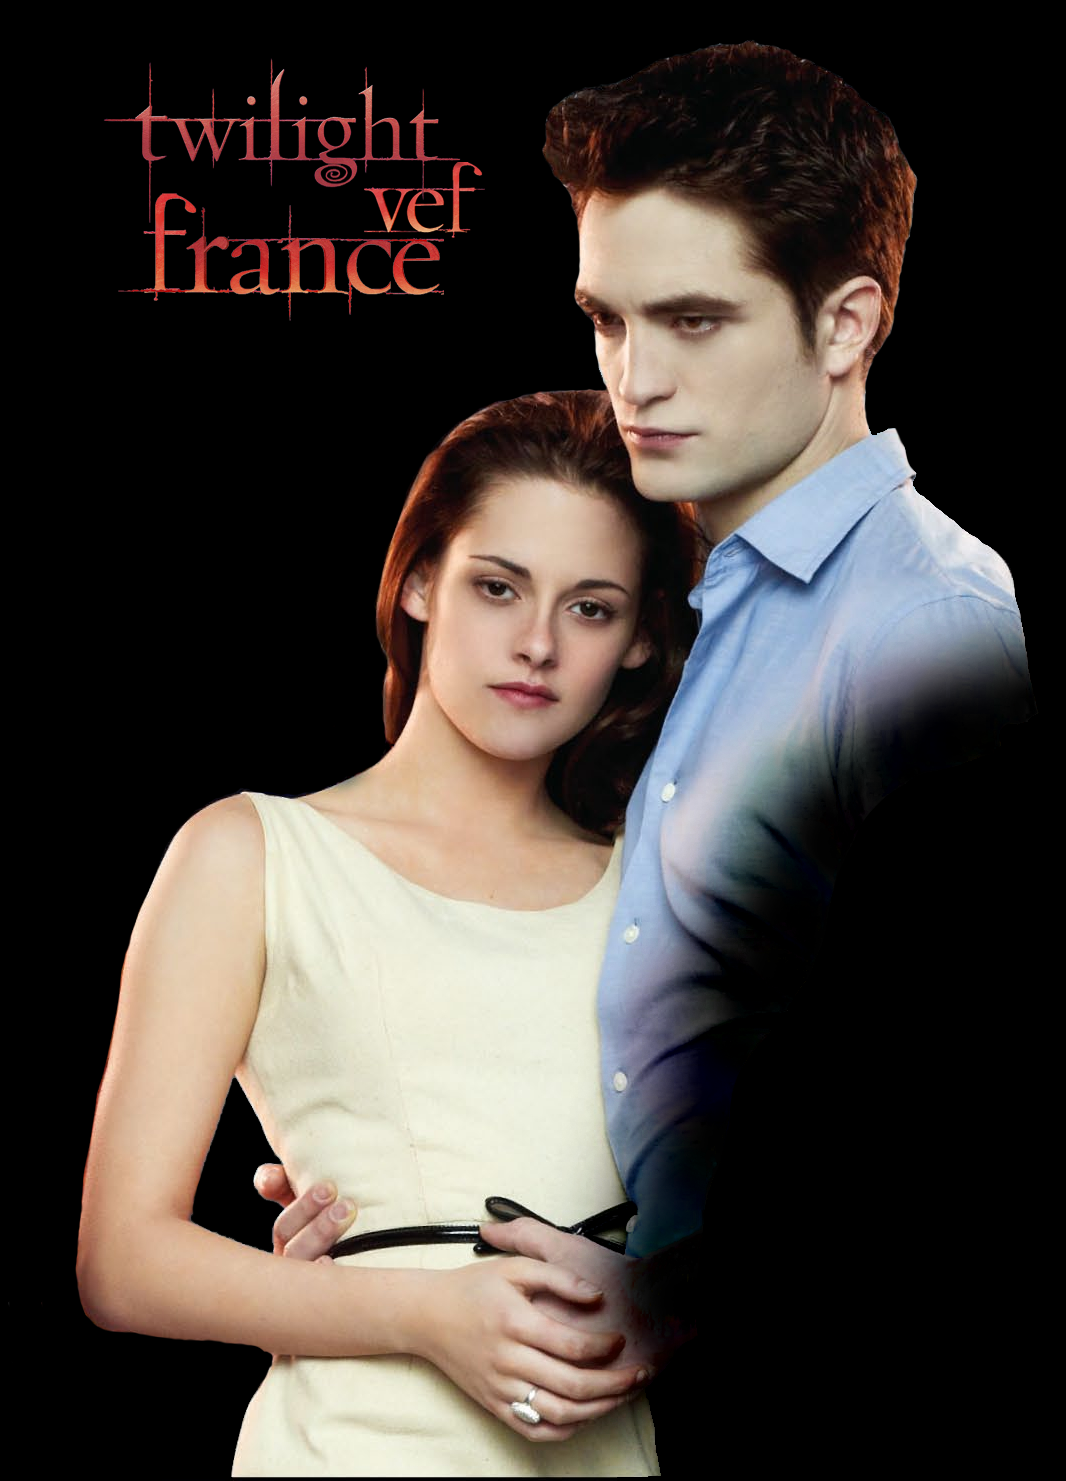 Nouveau photoshoot d'Edward & Bella dans Breaking Dawn